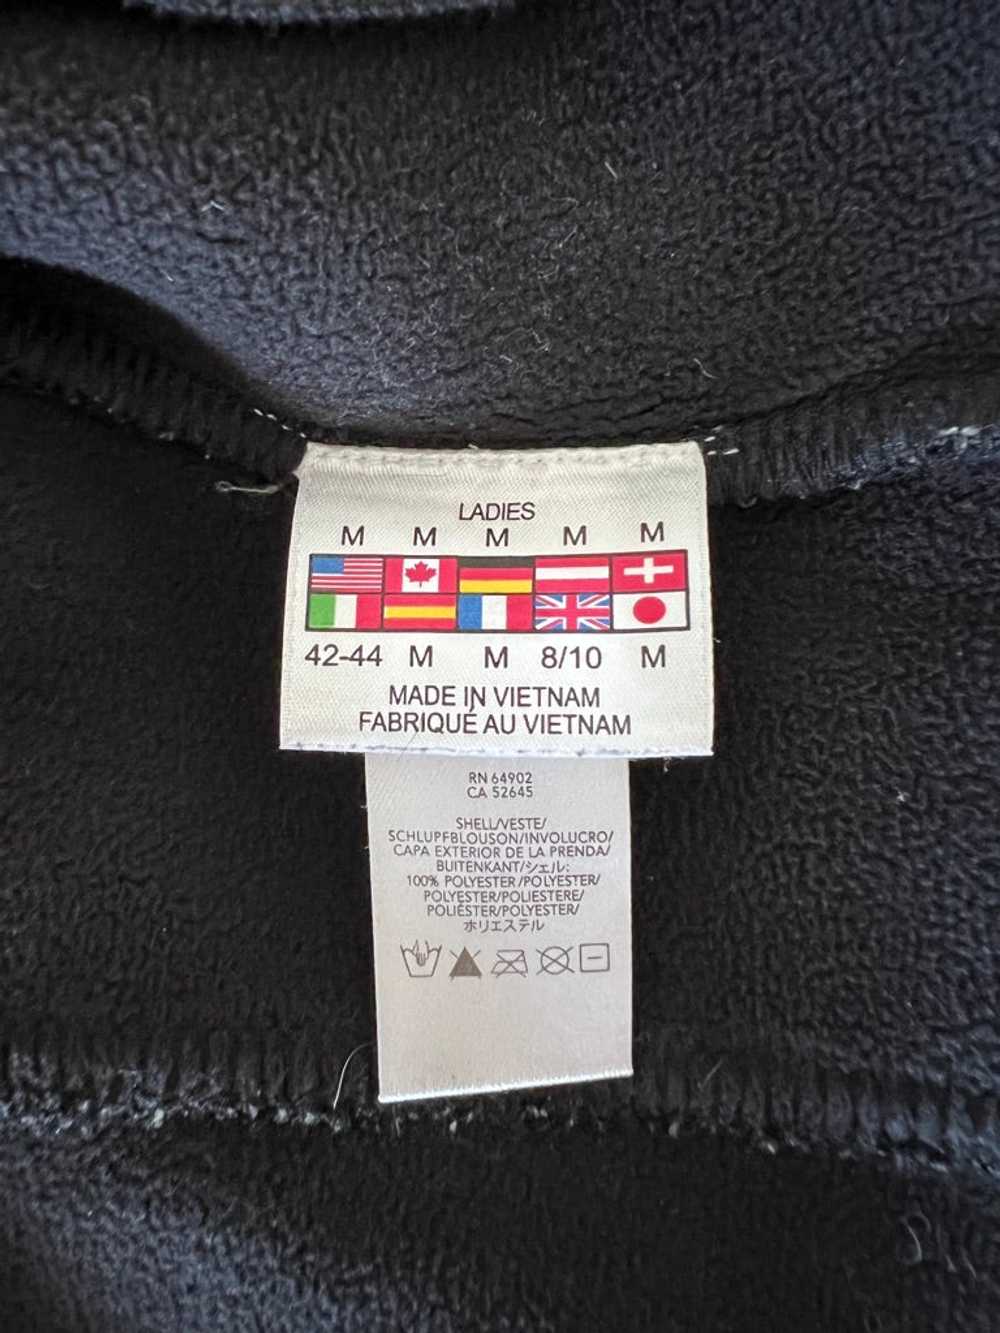 Spyder Black Zipper Core Sweater Jacket, M - image 8